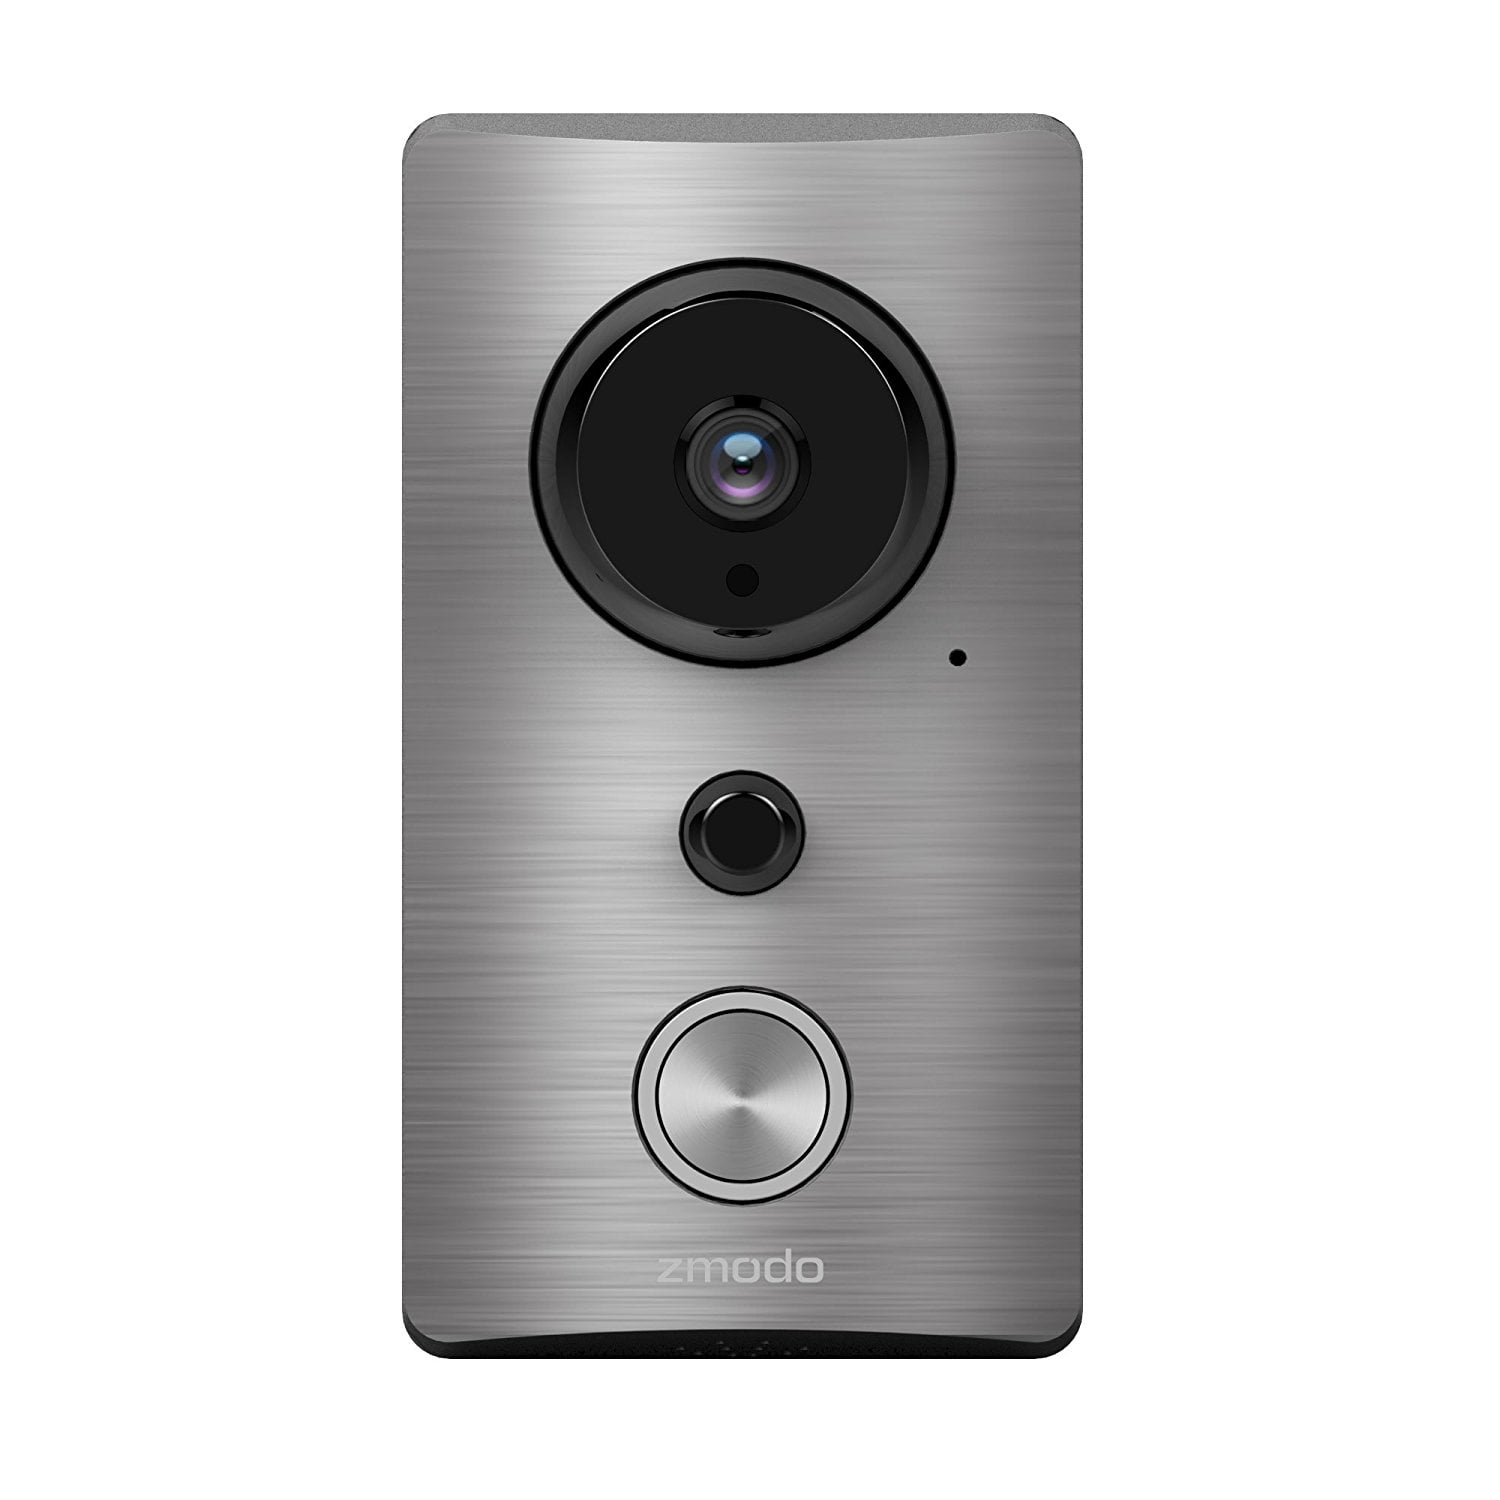 sinji wifi doorbell camera review